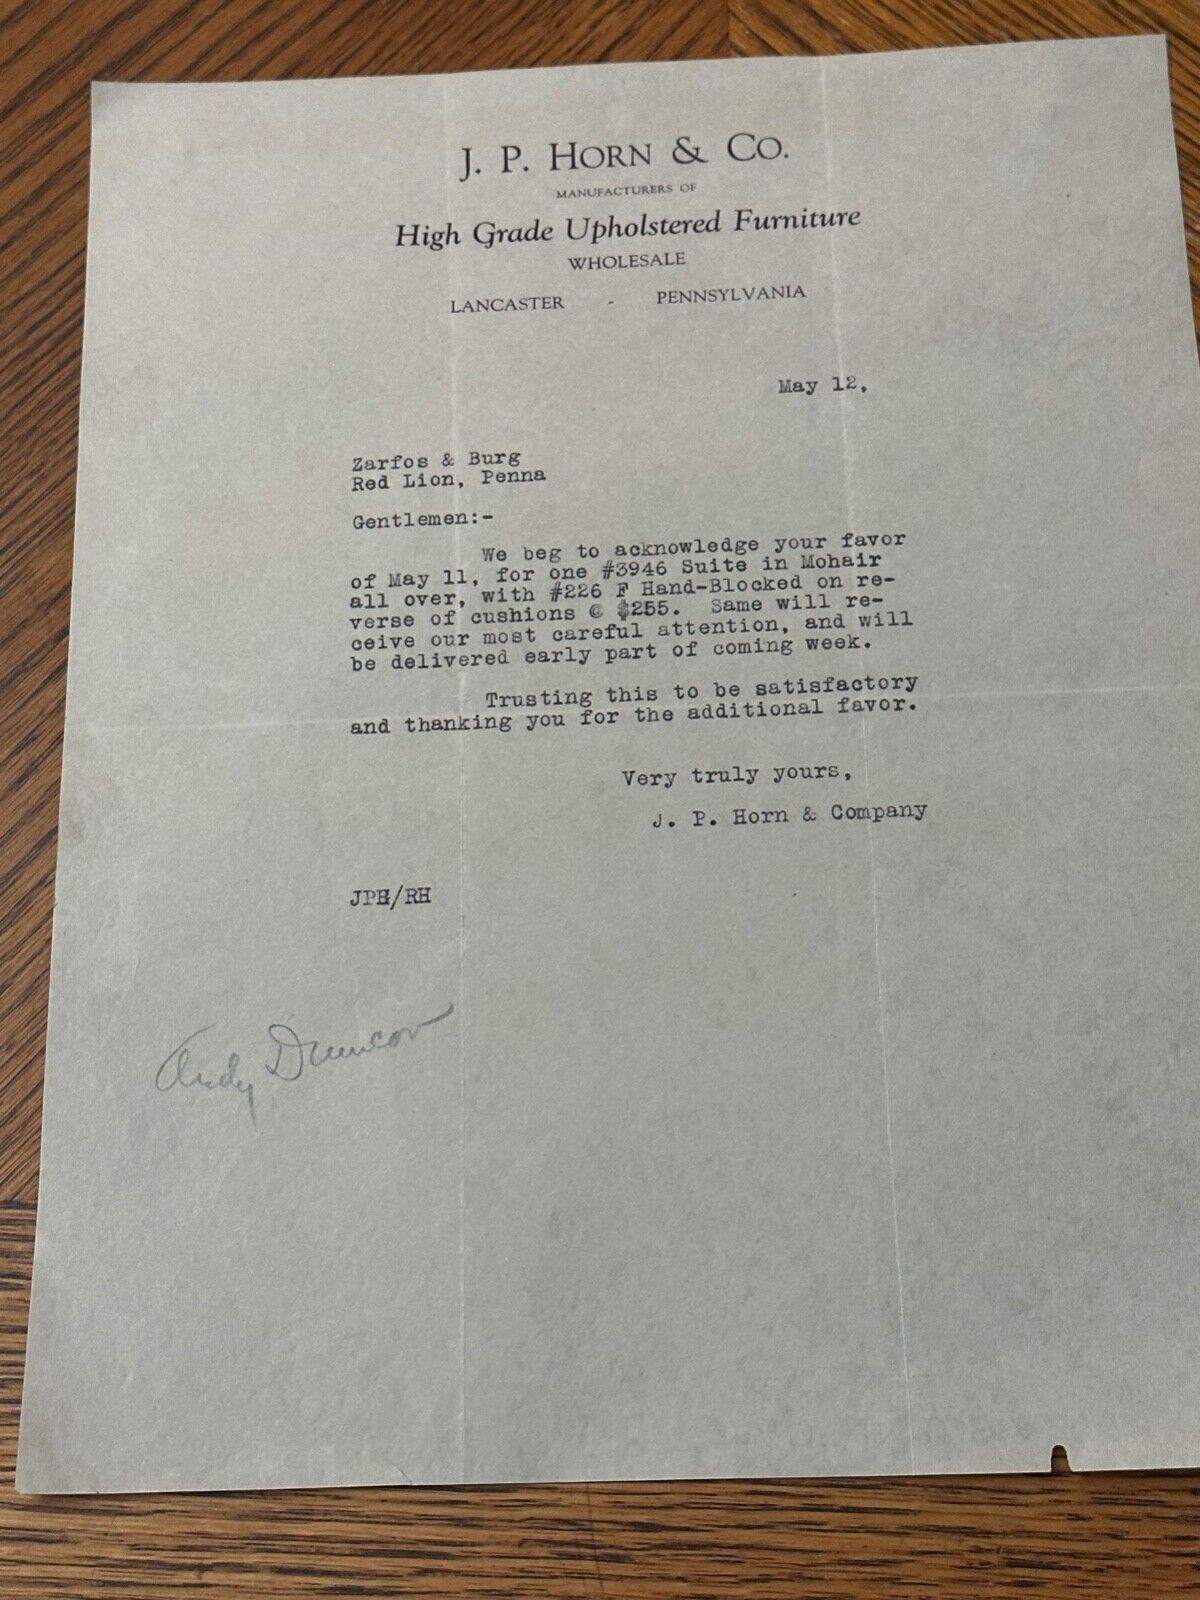 J.P. Horn Furniture Letter to Zarfos & Burg Red Lion Lancaster PA 1920s 